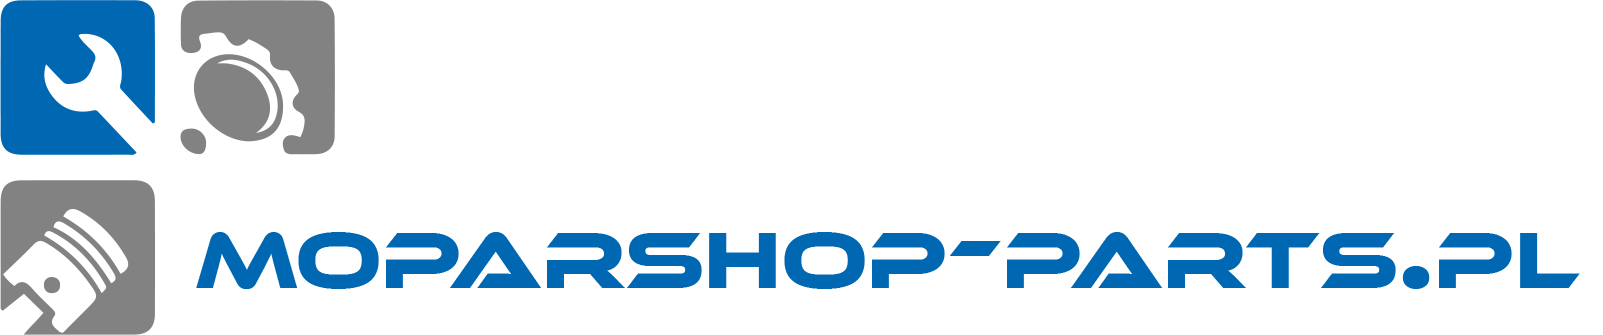 Moparshop_logo_new_2020-PL